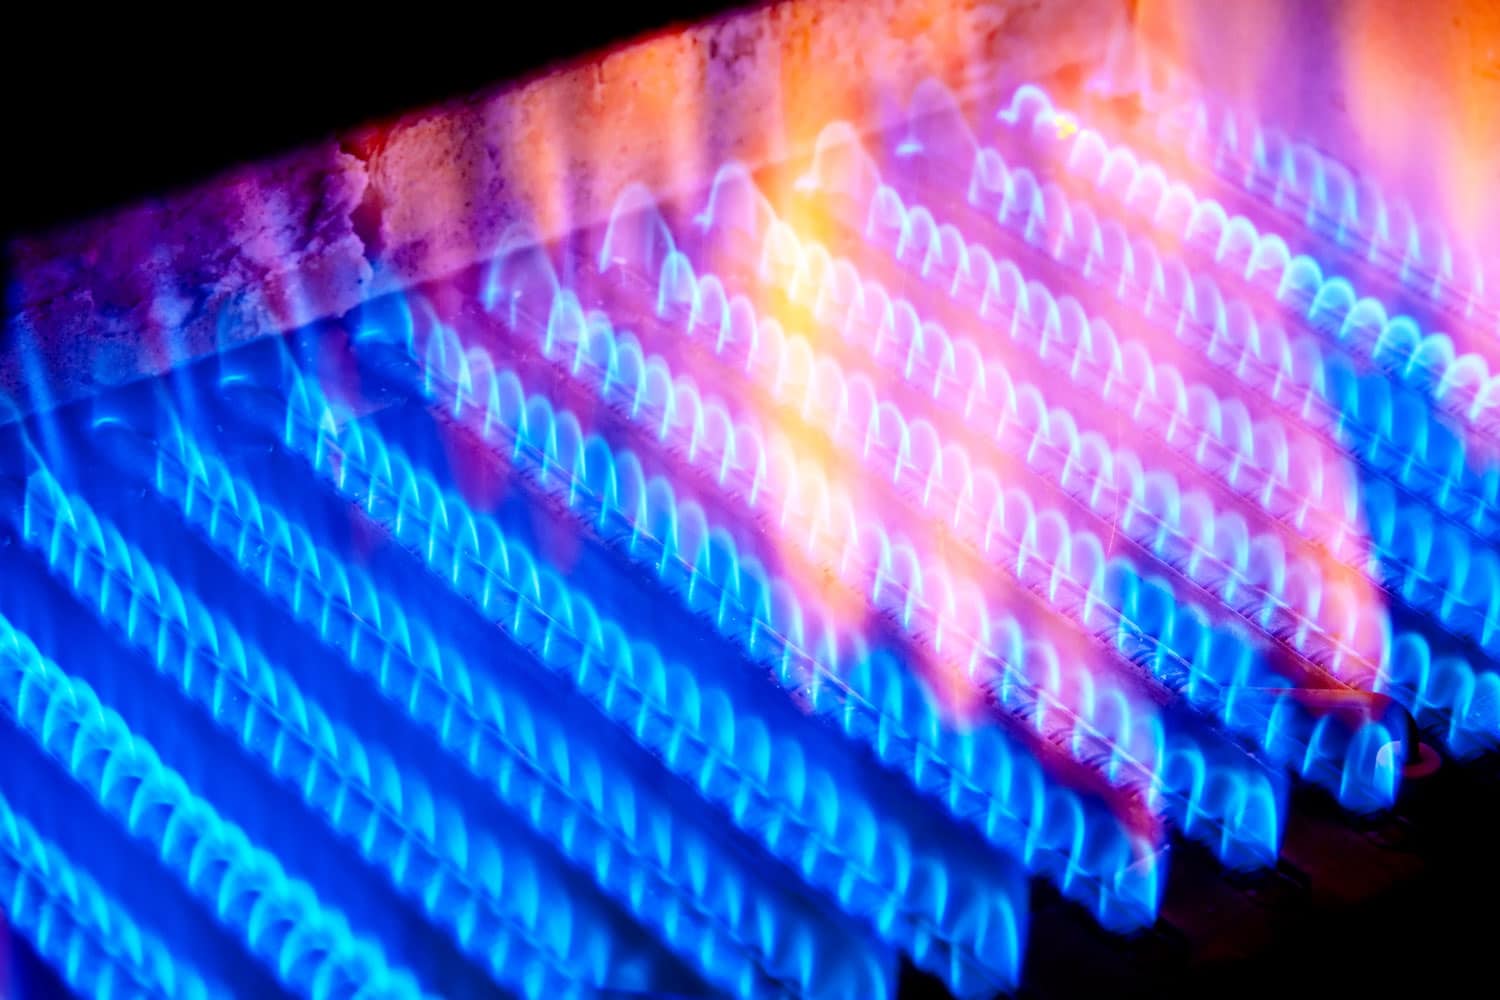 Fire burns from a gas burner inside the boiler